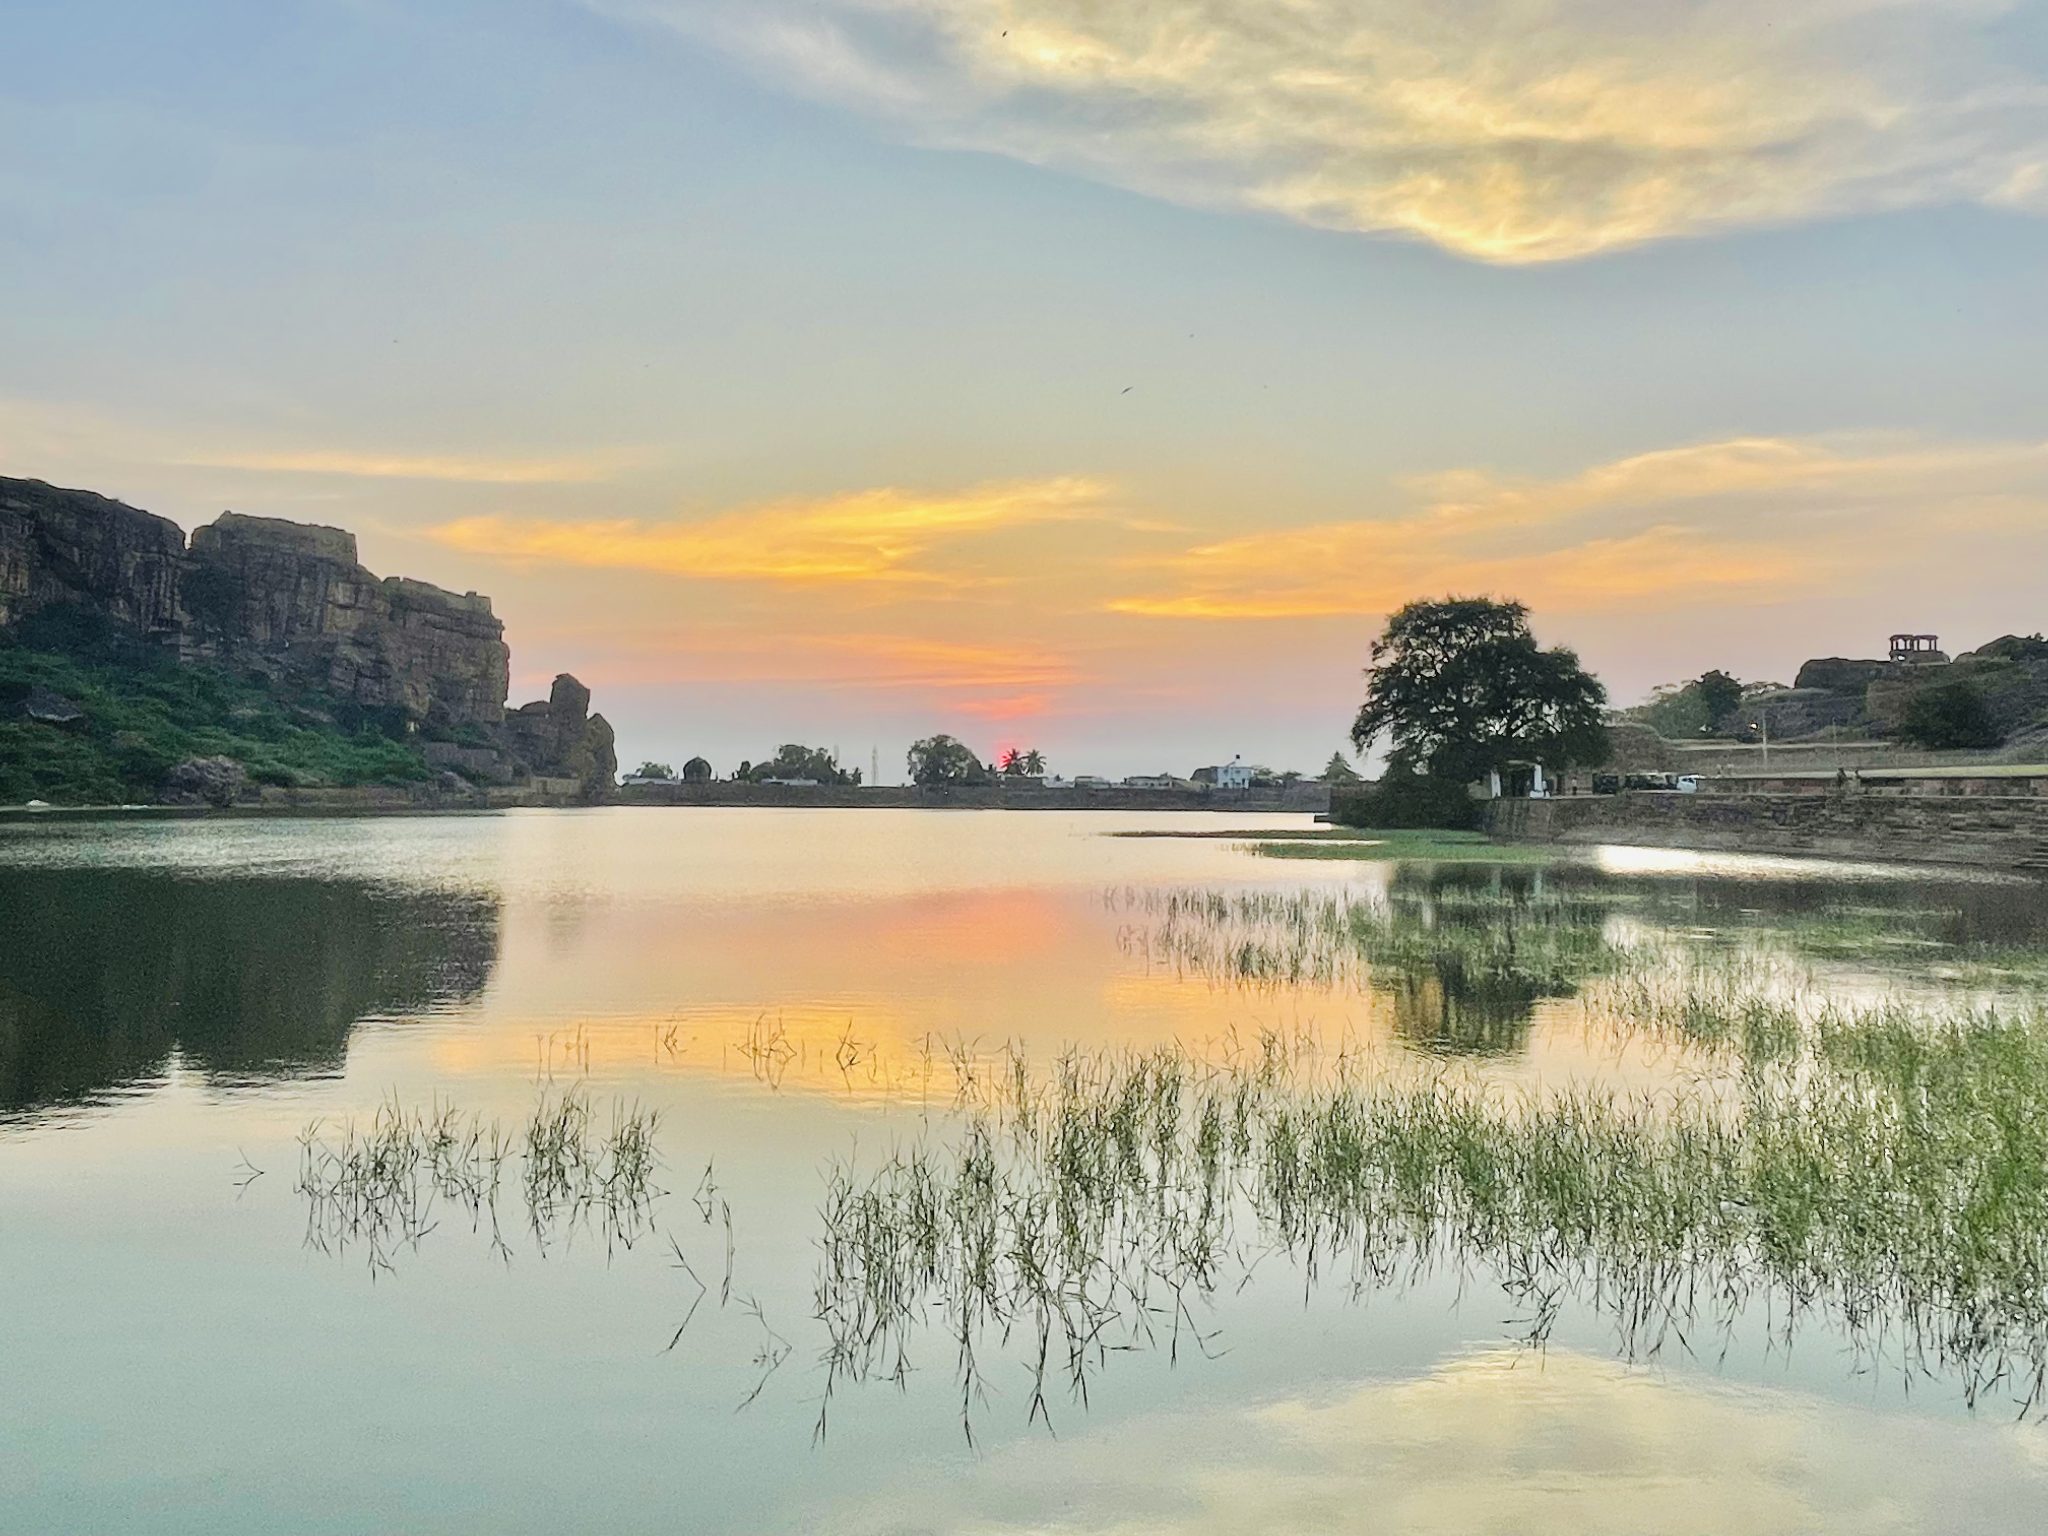 Sunset at Agasthya Lake. From Badami, Karnataka, India.